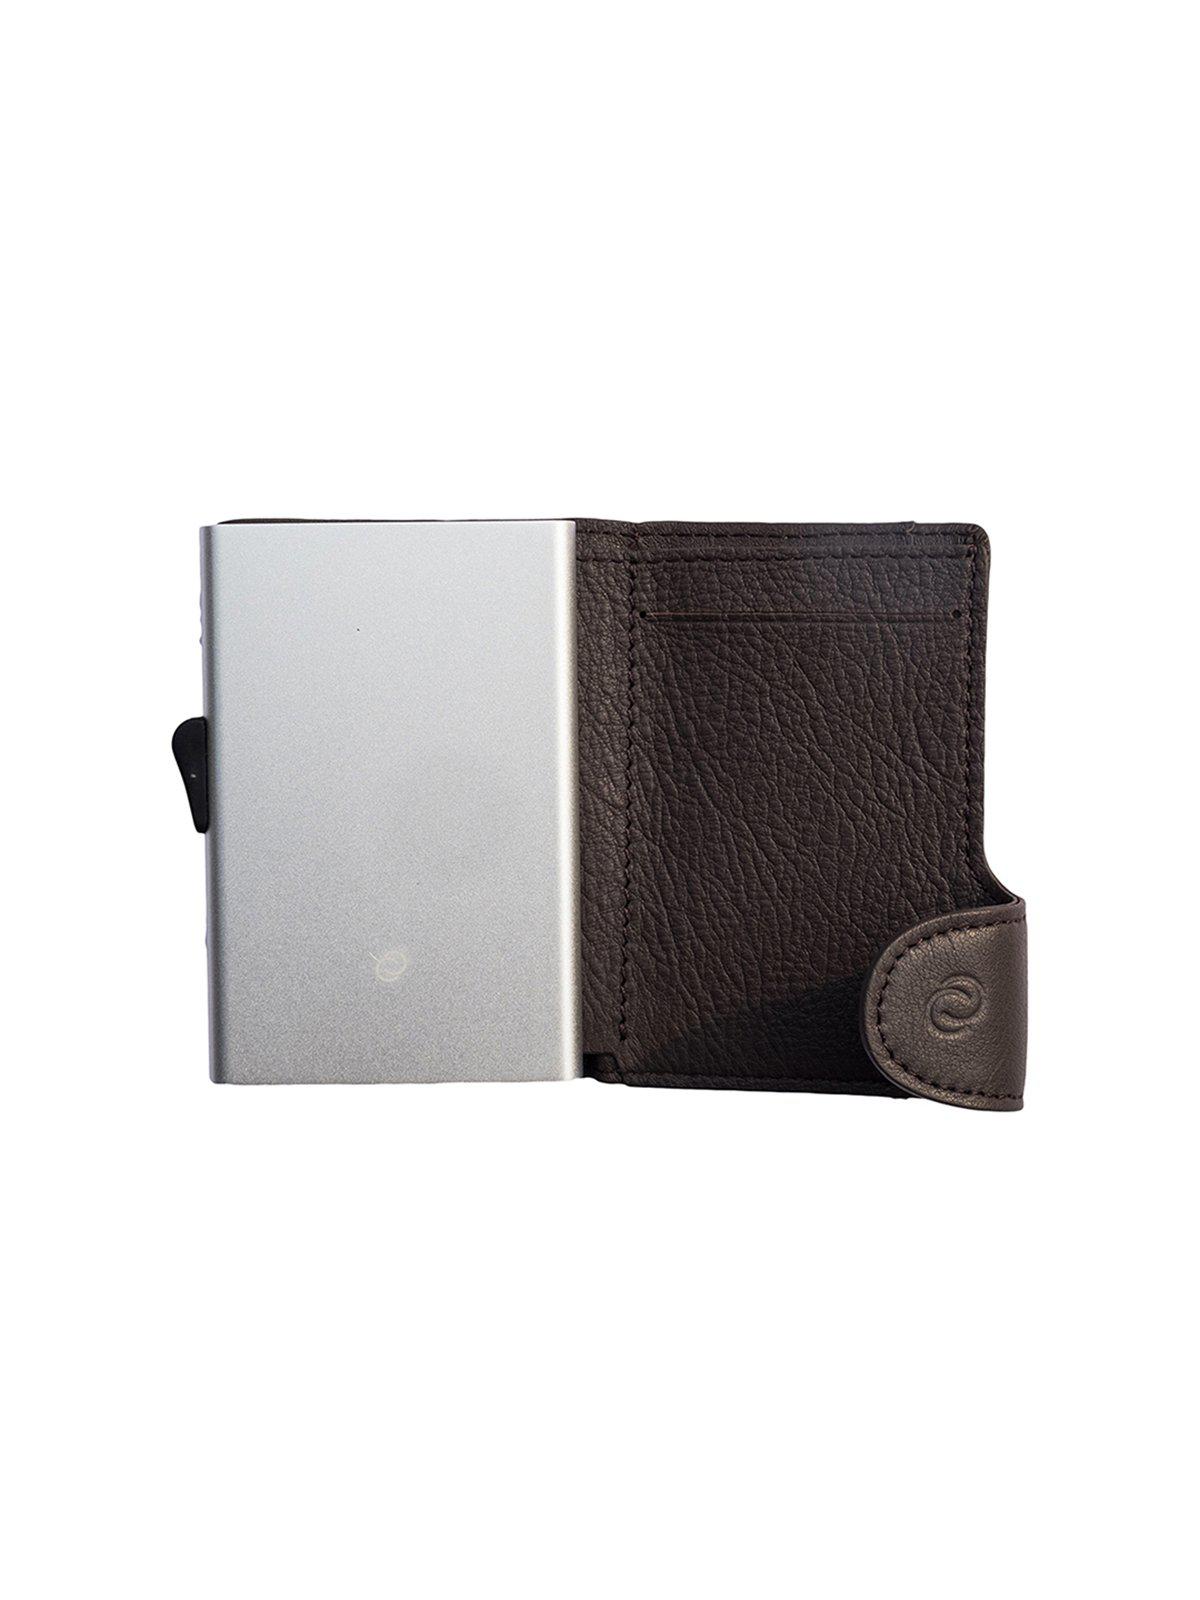 C-Secure Italian Leather RFID Wallet Testa Di Moro - MORE by Morello Indonesia